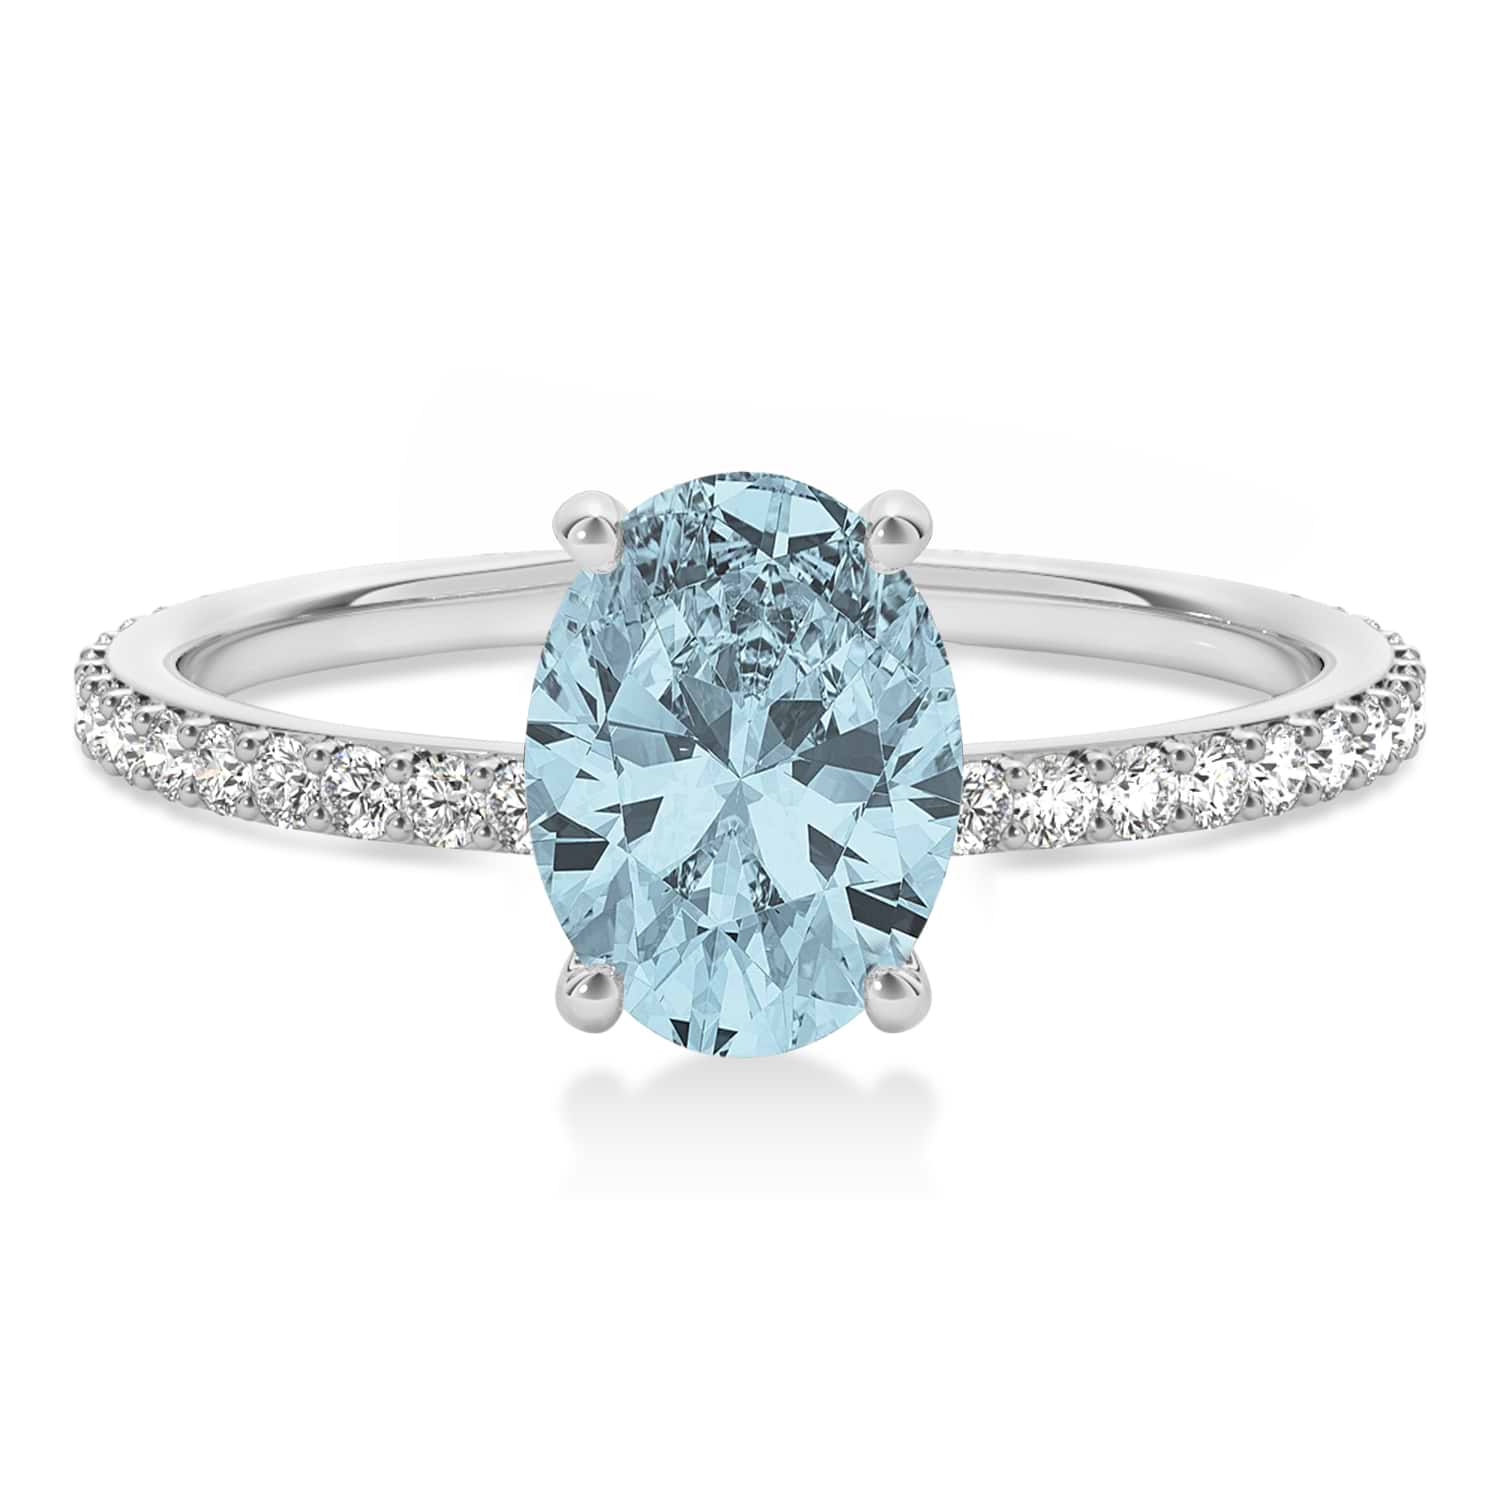 Oval Aquamarine & Diamond Hidden Halo Engagement Ring 14k White Gold (0.76ct)